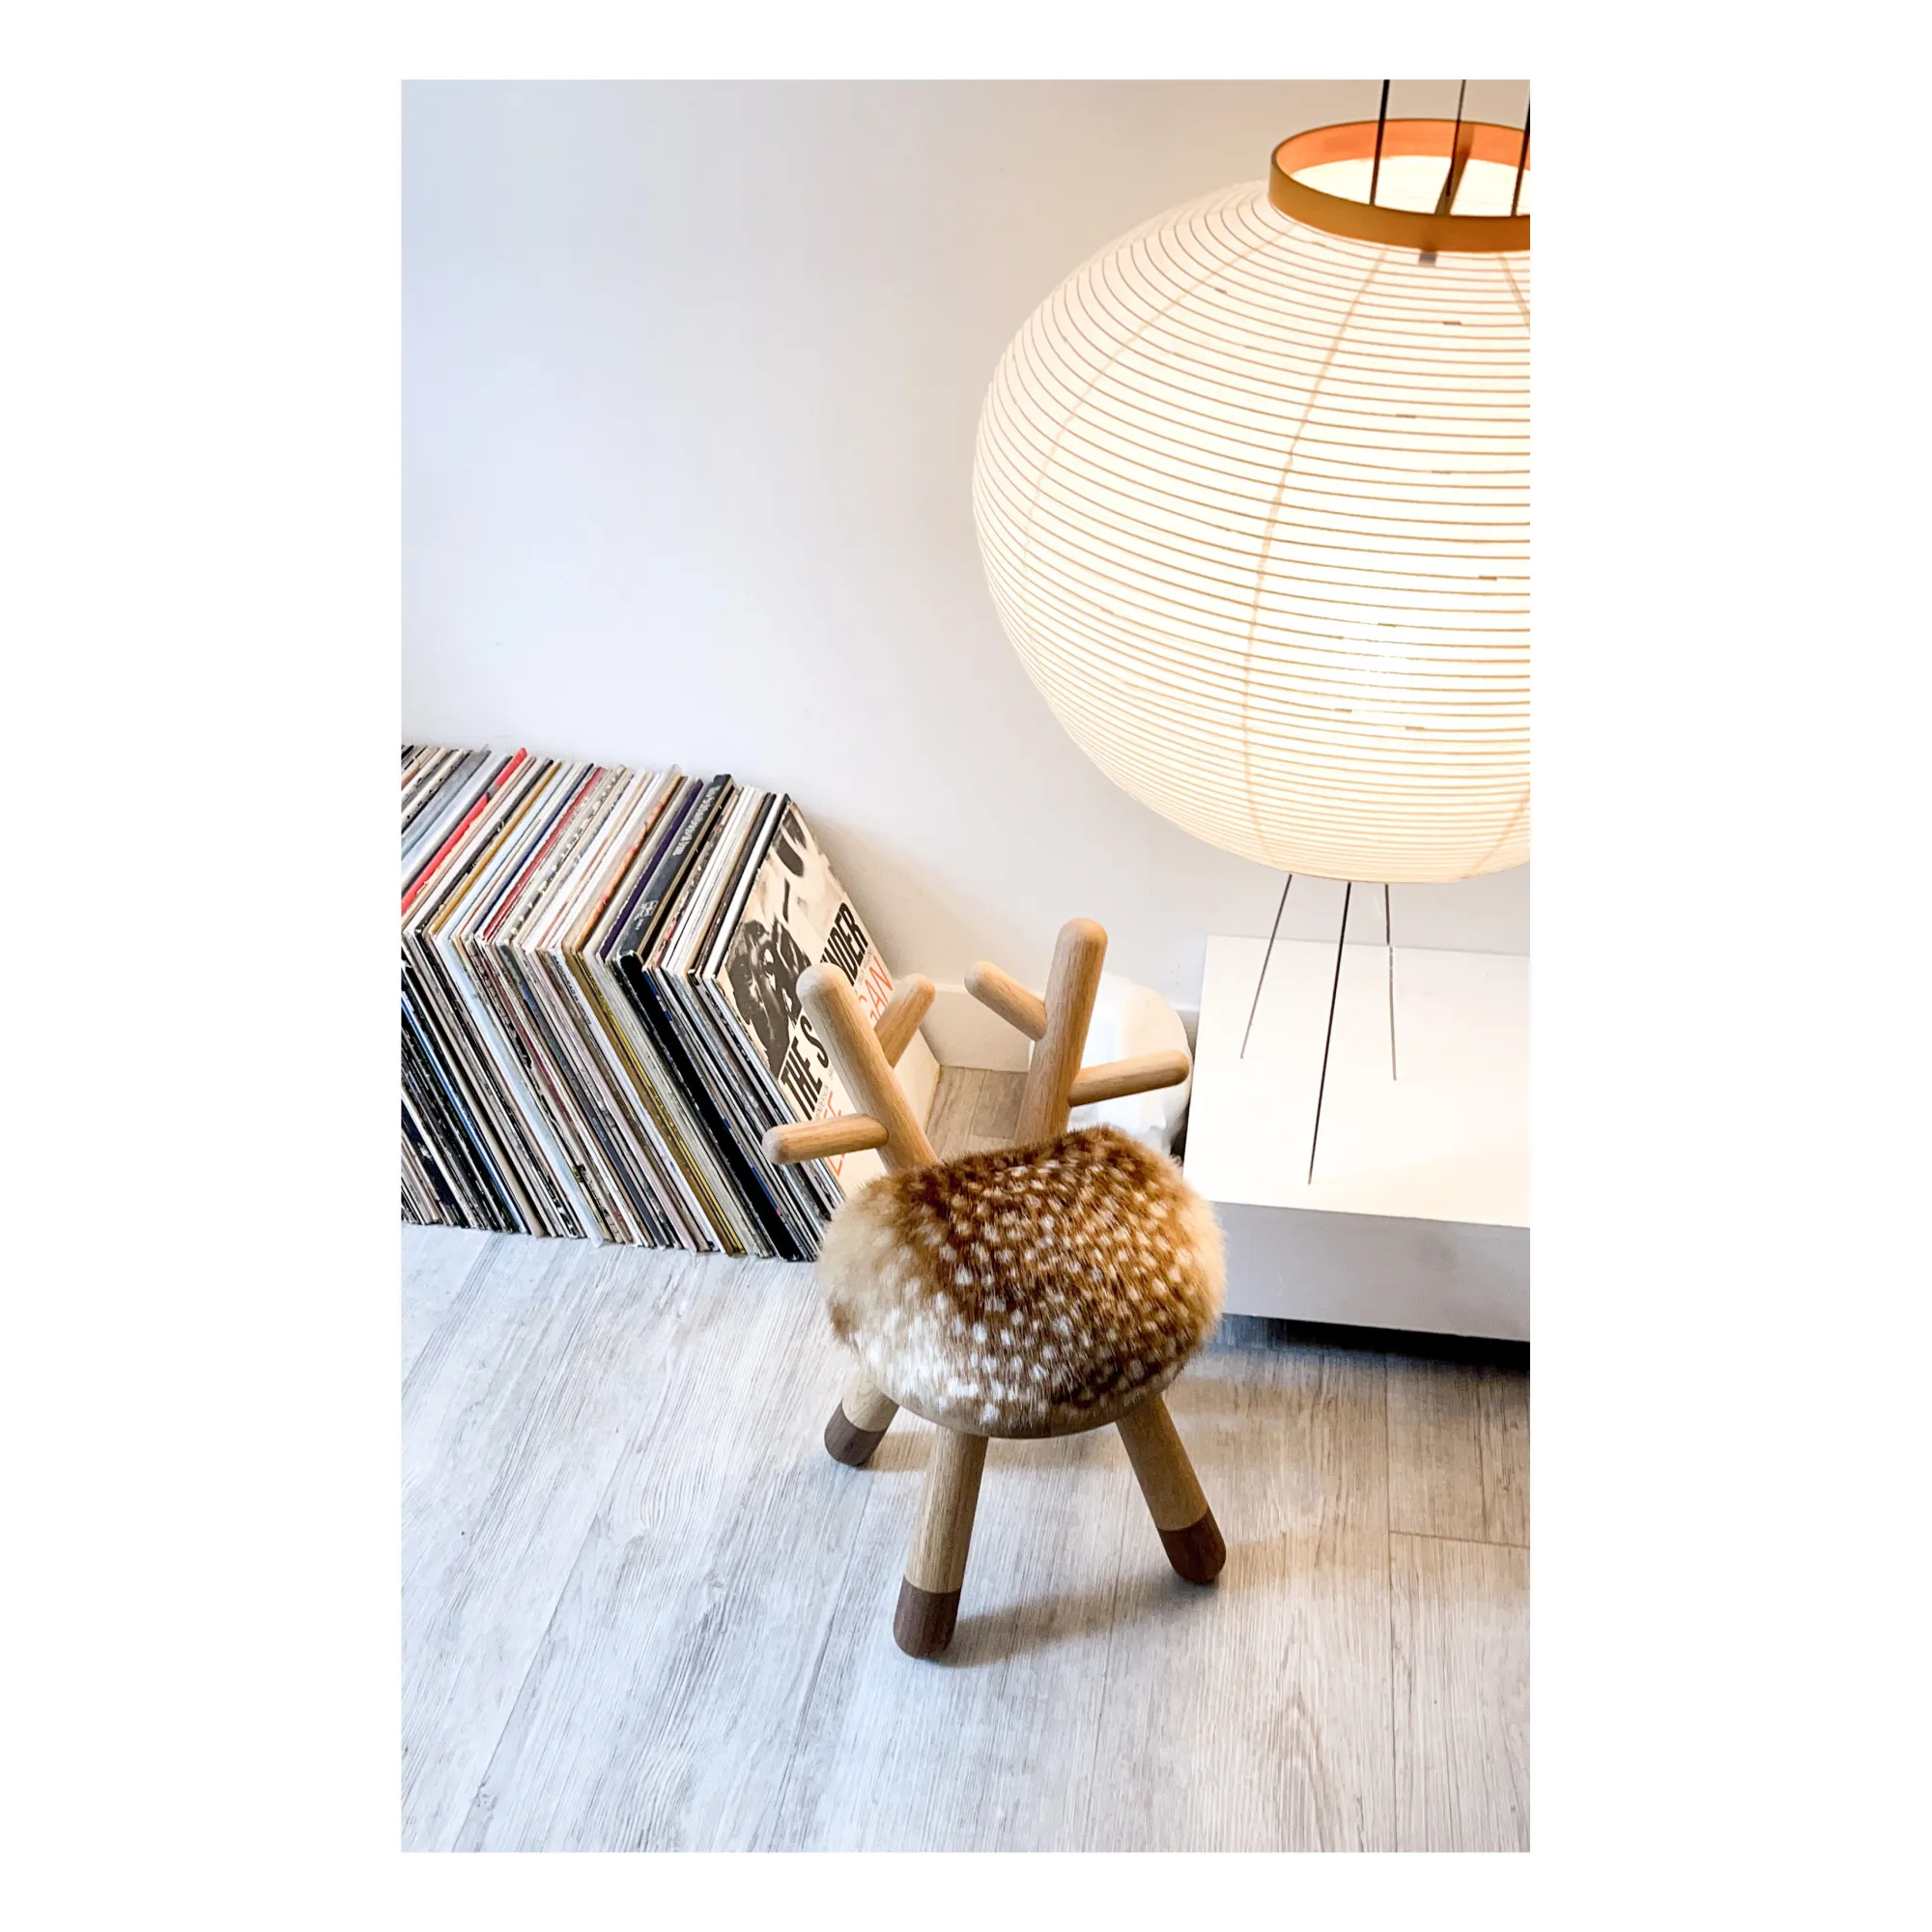 Bambi Chair in Oak and walnut by Takeshi Sawada